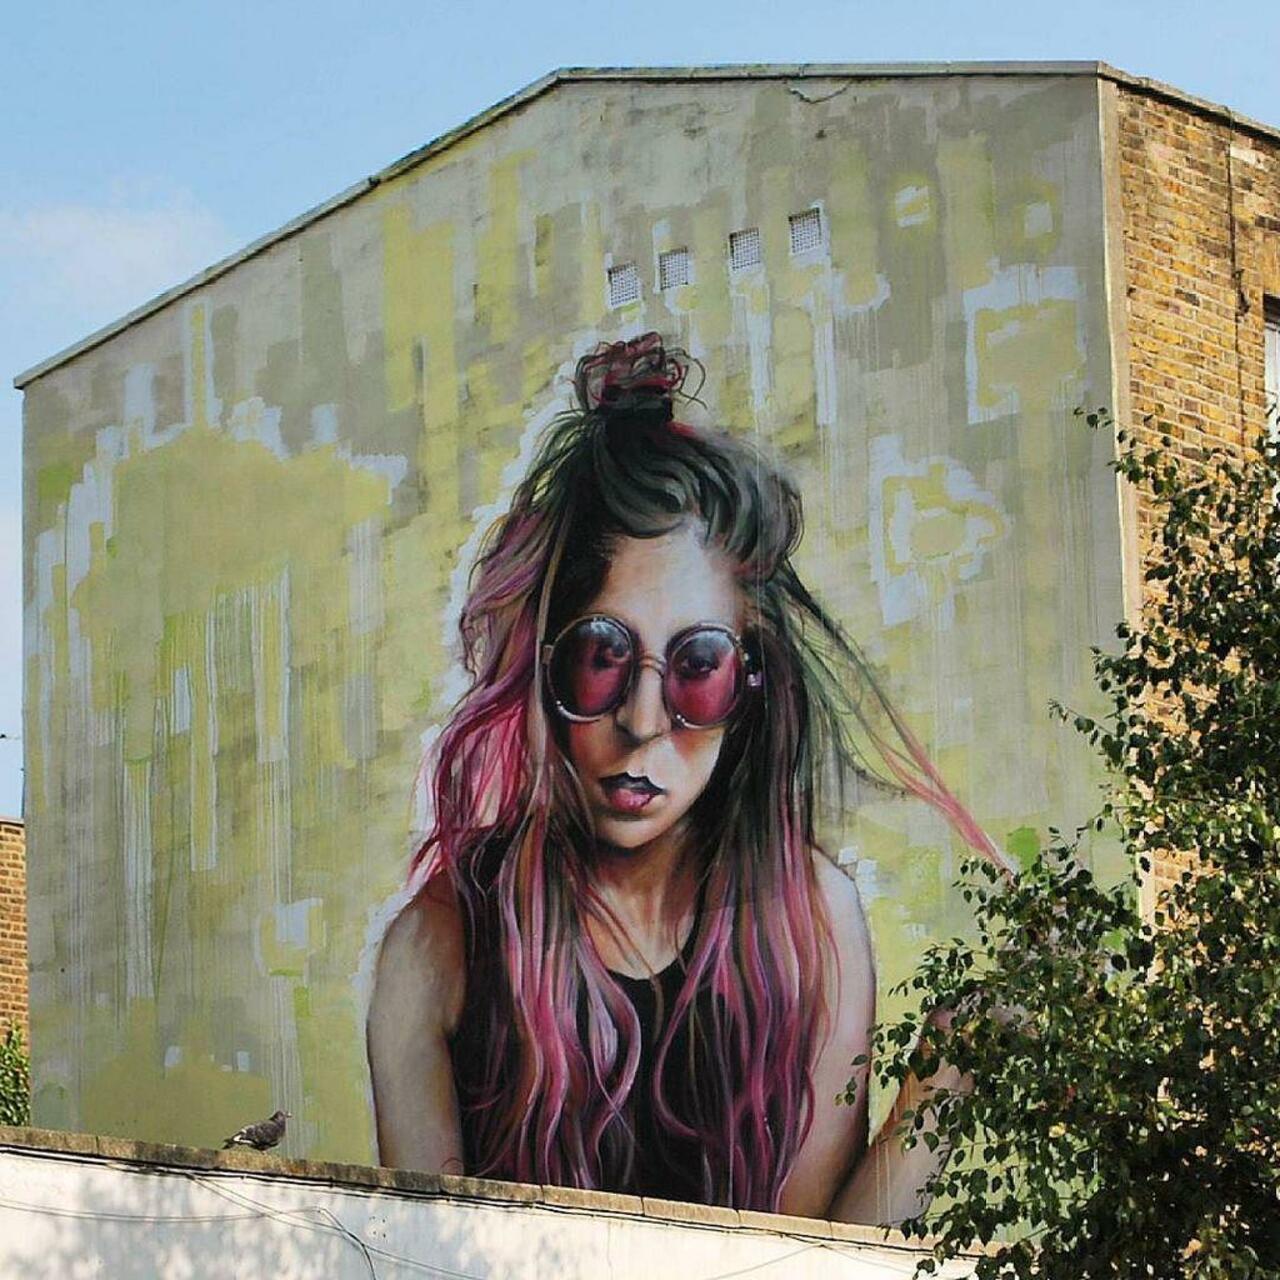 Art by Irony  
#Graffiti #StreetArt #UrbanArt #WhoAmIrony #BayhamStreet #Camden #London #Nikon #NikonD60 #NikonPho… http://t.co/iAONNW15zO